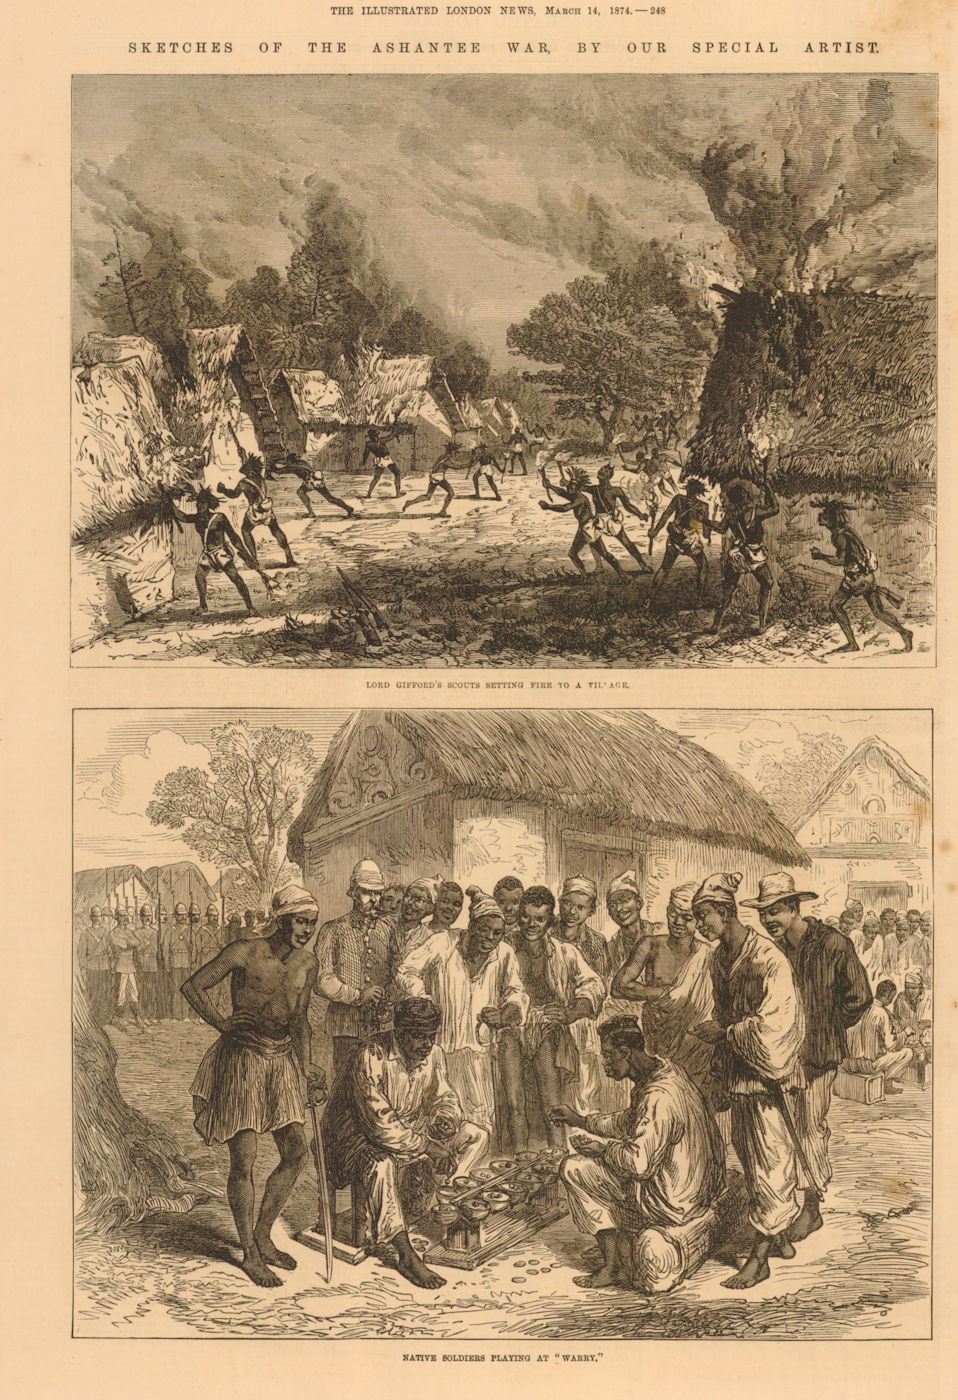 3rd Ashanti War. Lord Gifford's scouts burn village. Natives Warry. Ghana 1874